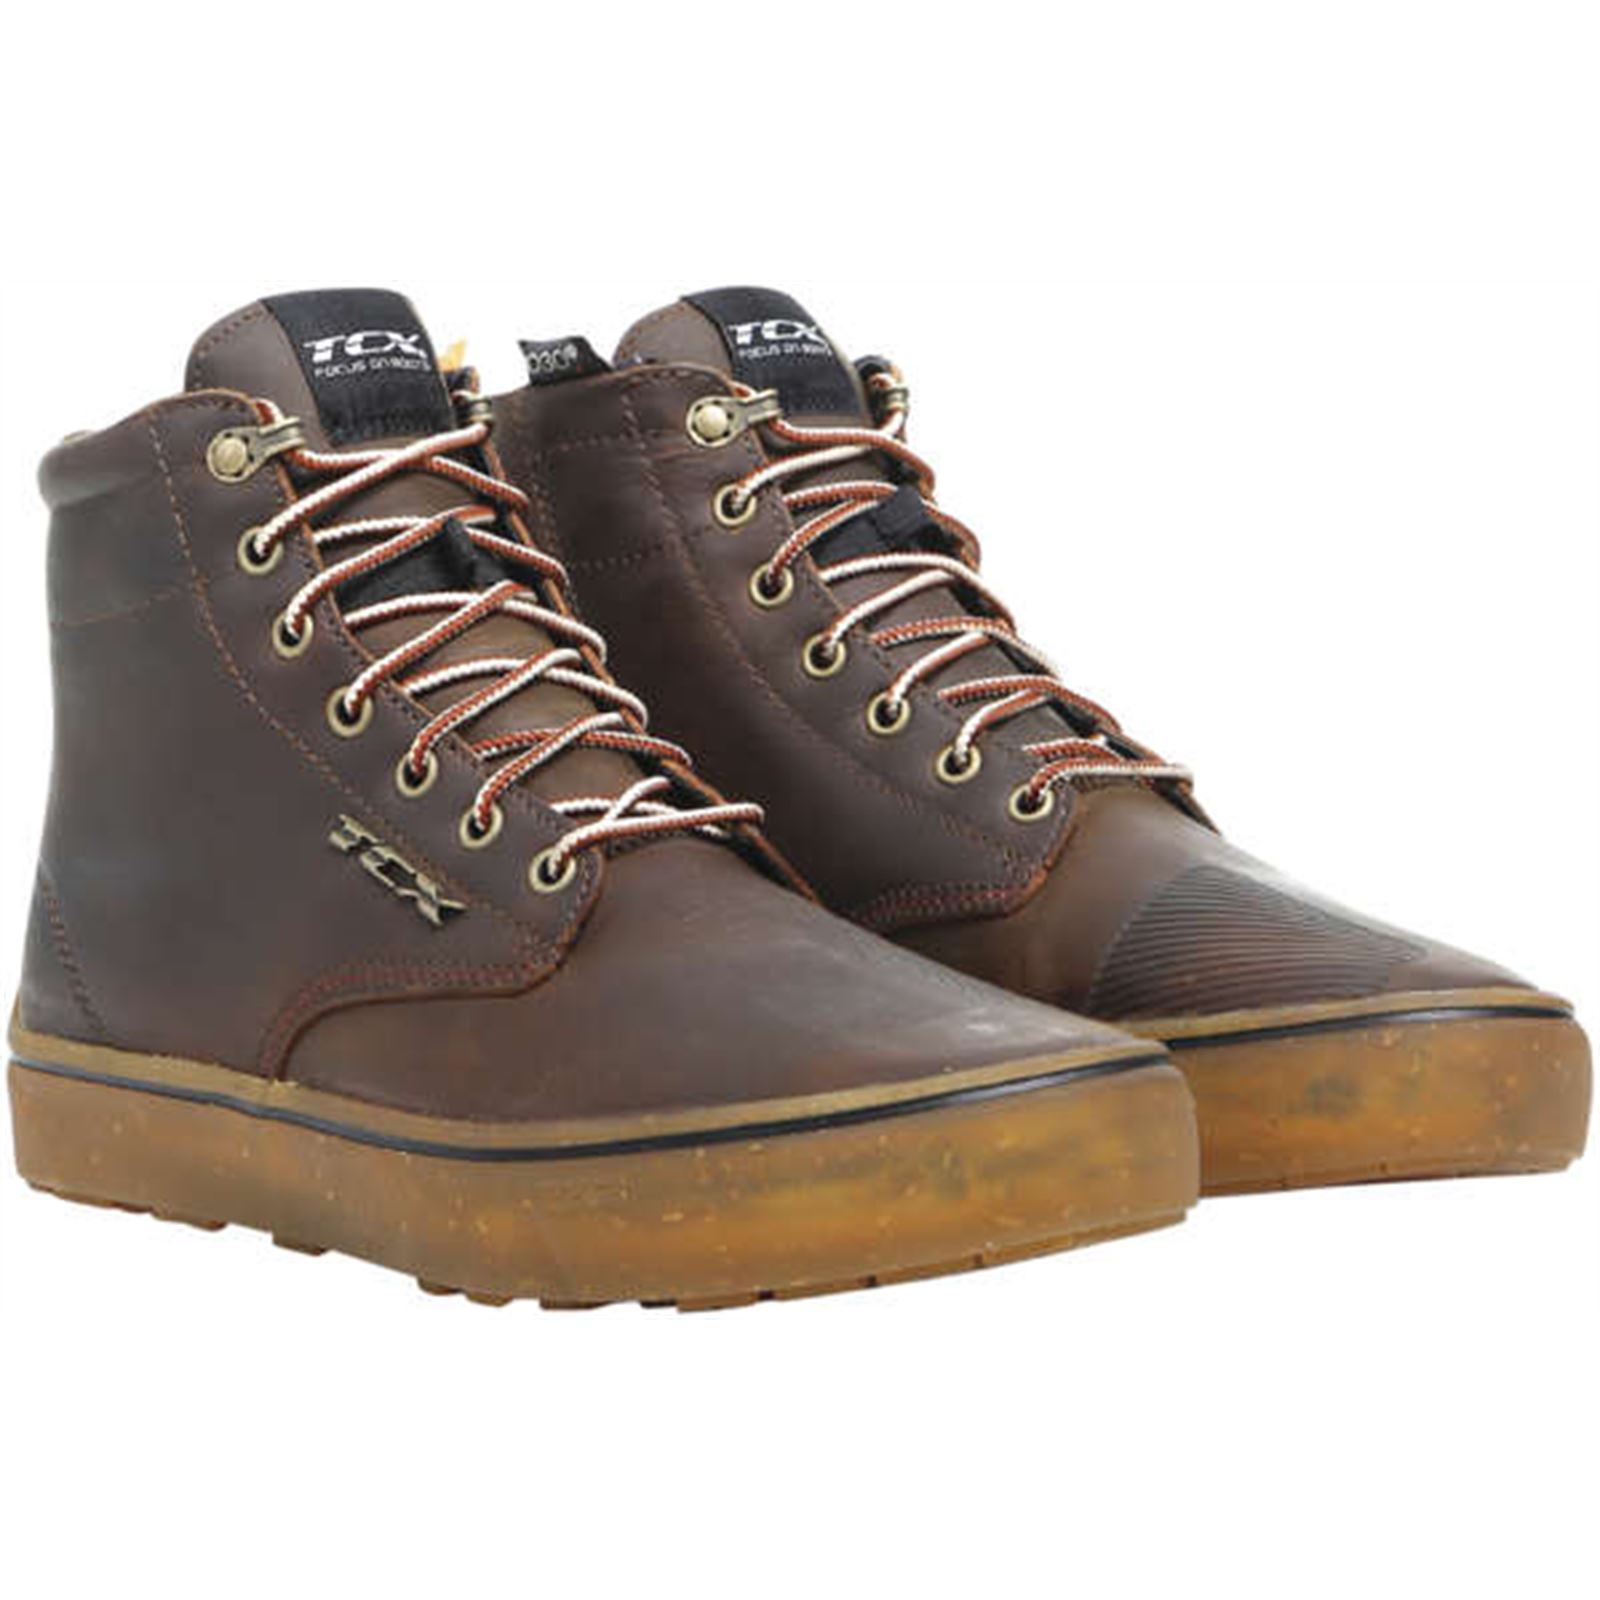 TCX Dartwood WP Men's Boots - Brown - US Size 8.5